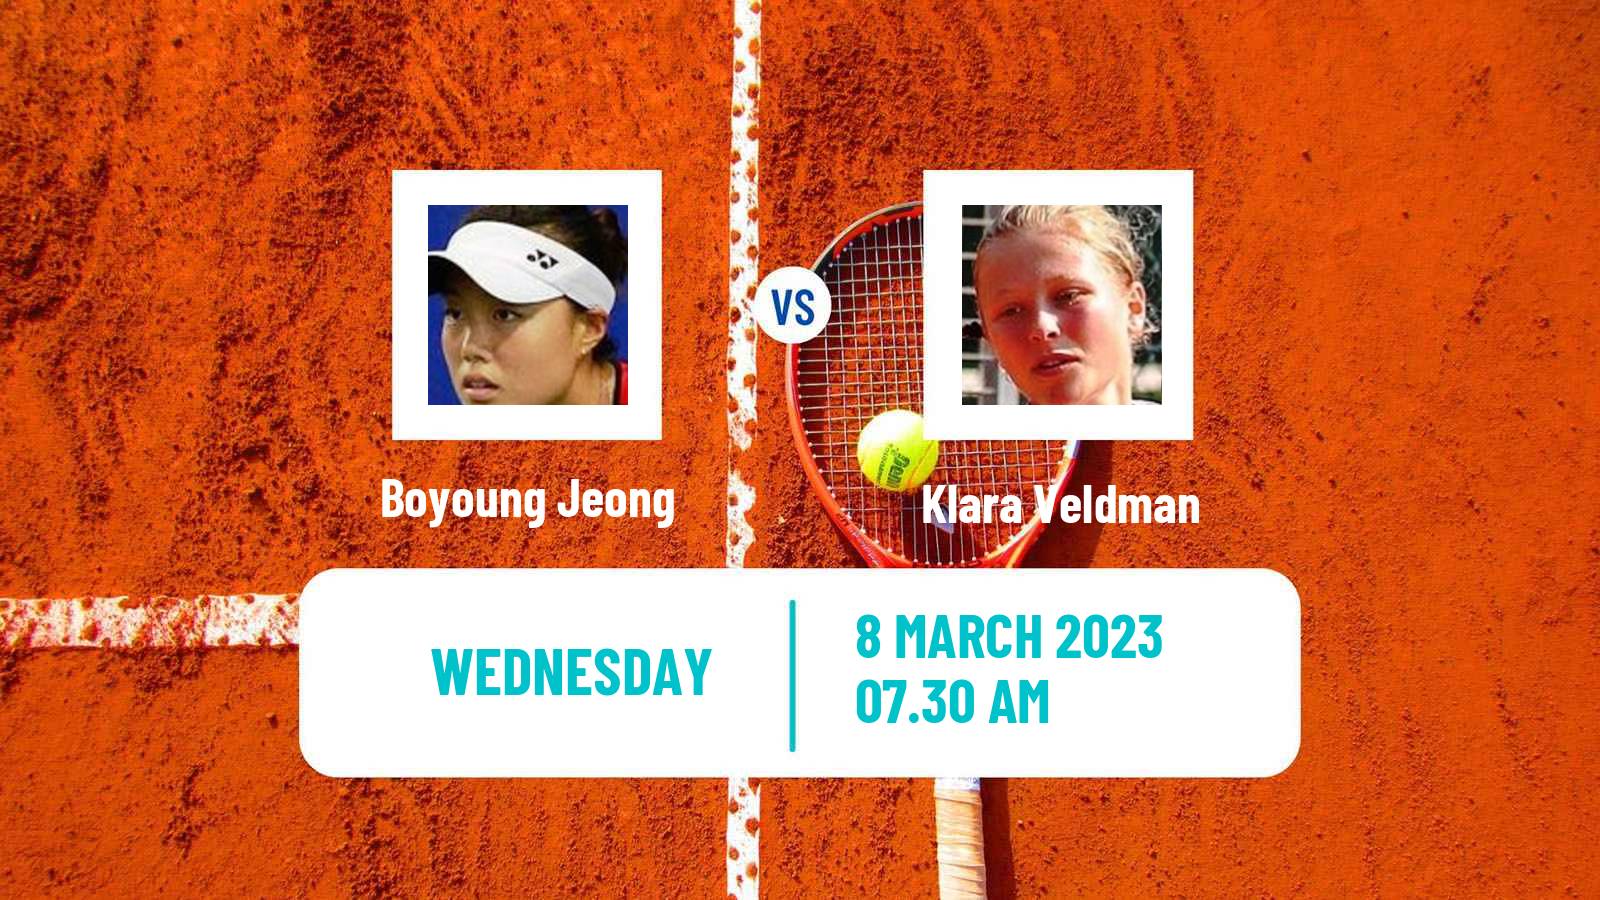 Tennis ITF Tournaments Boyoung Jeong - Klara Veldman